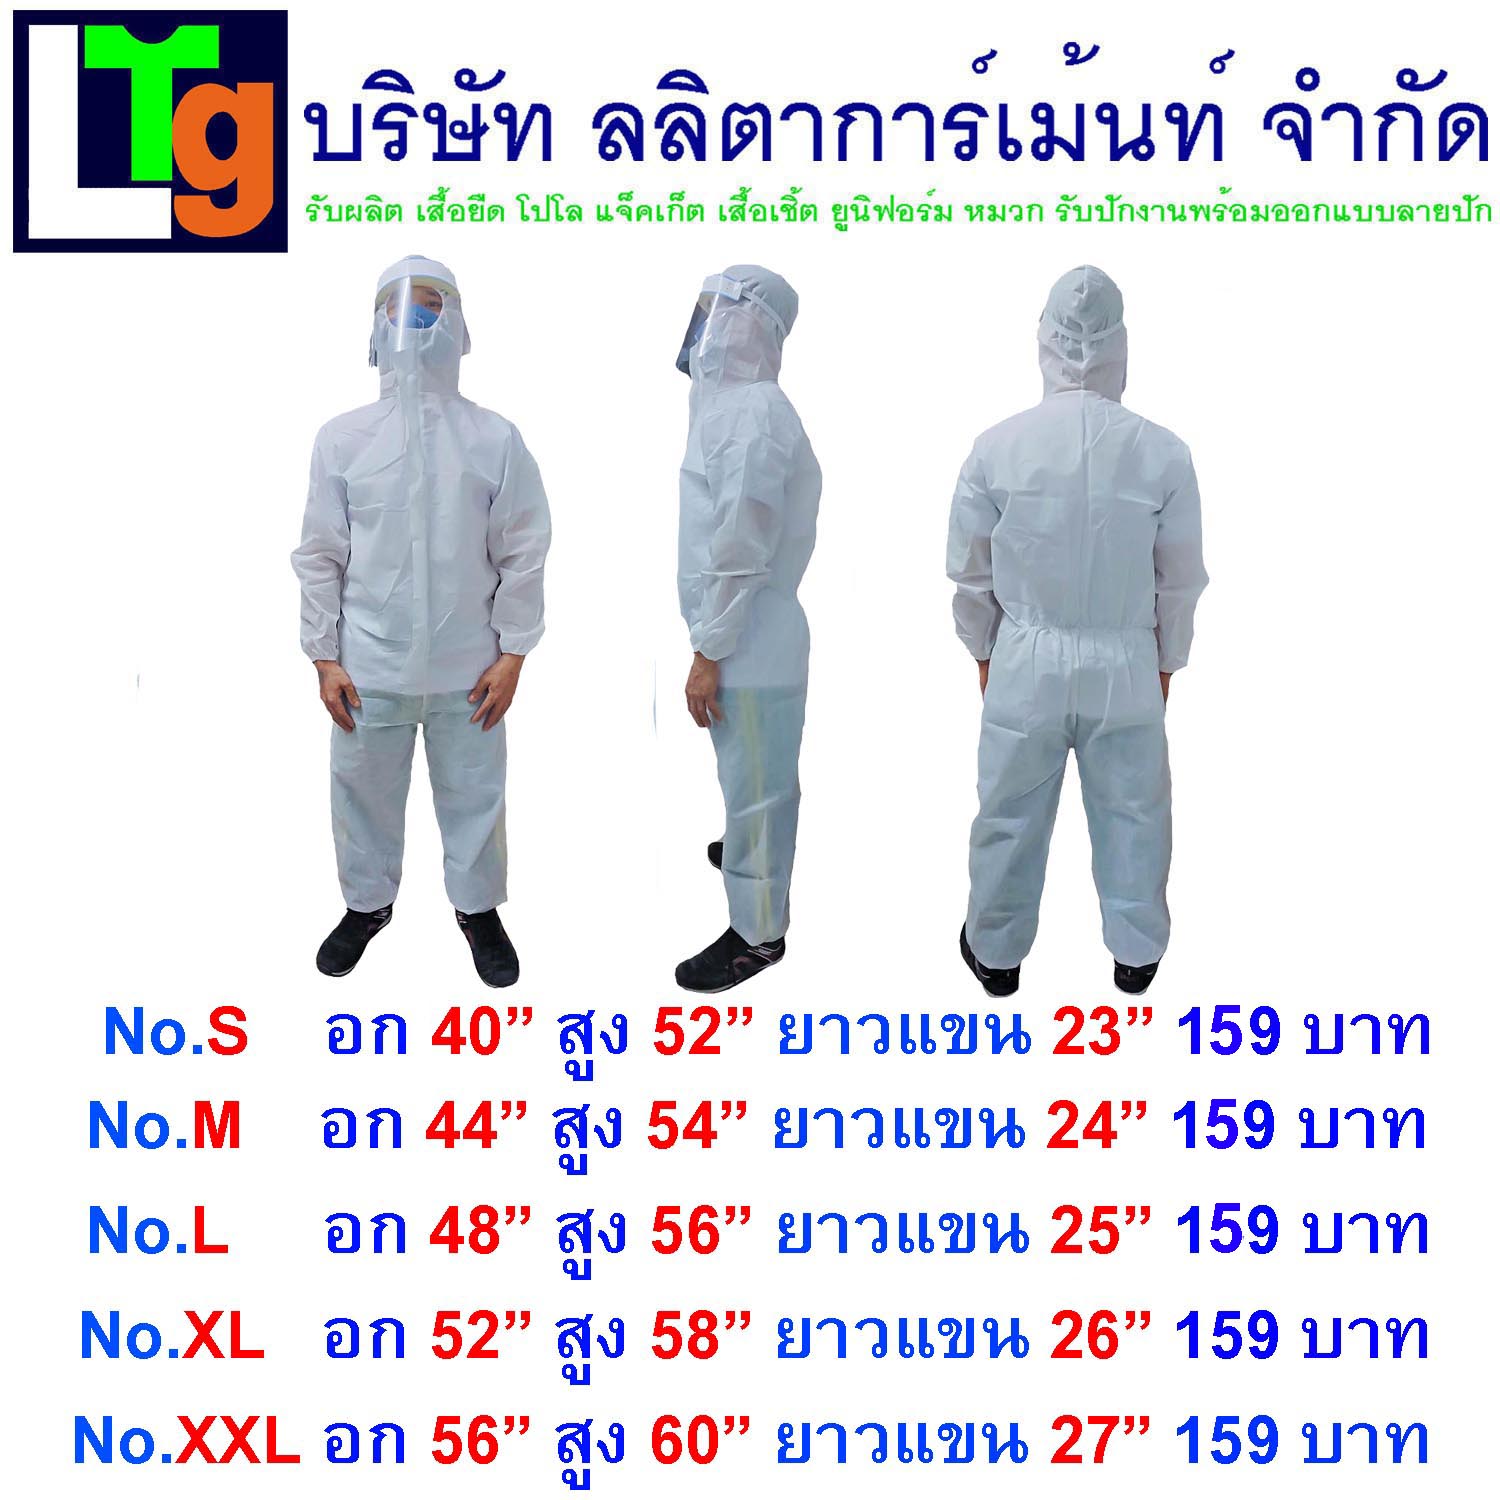 PPE ชุดป้องกันฝุ่นและสารเคมี ชุดกันสาร ชุดกันฝุ่น ชุดเซฟตี้ ปกป้องฝุ่นละอองและของเหลว(สีขาว)